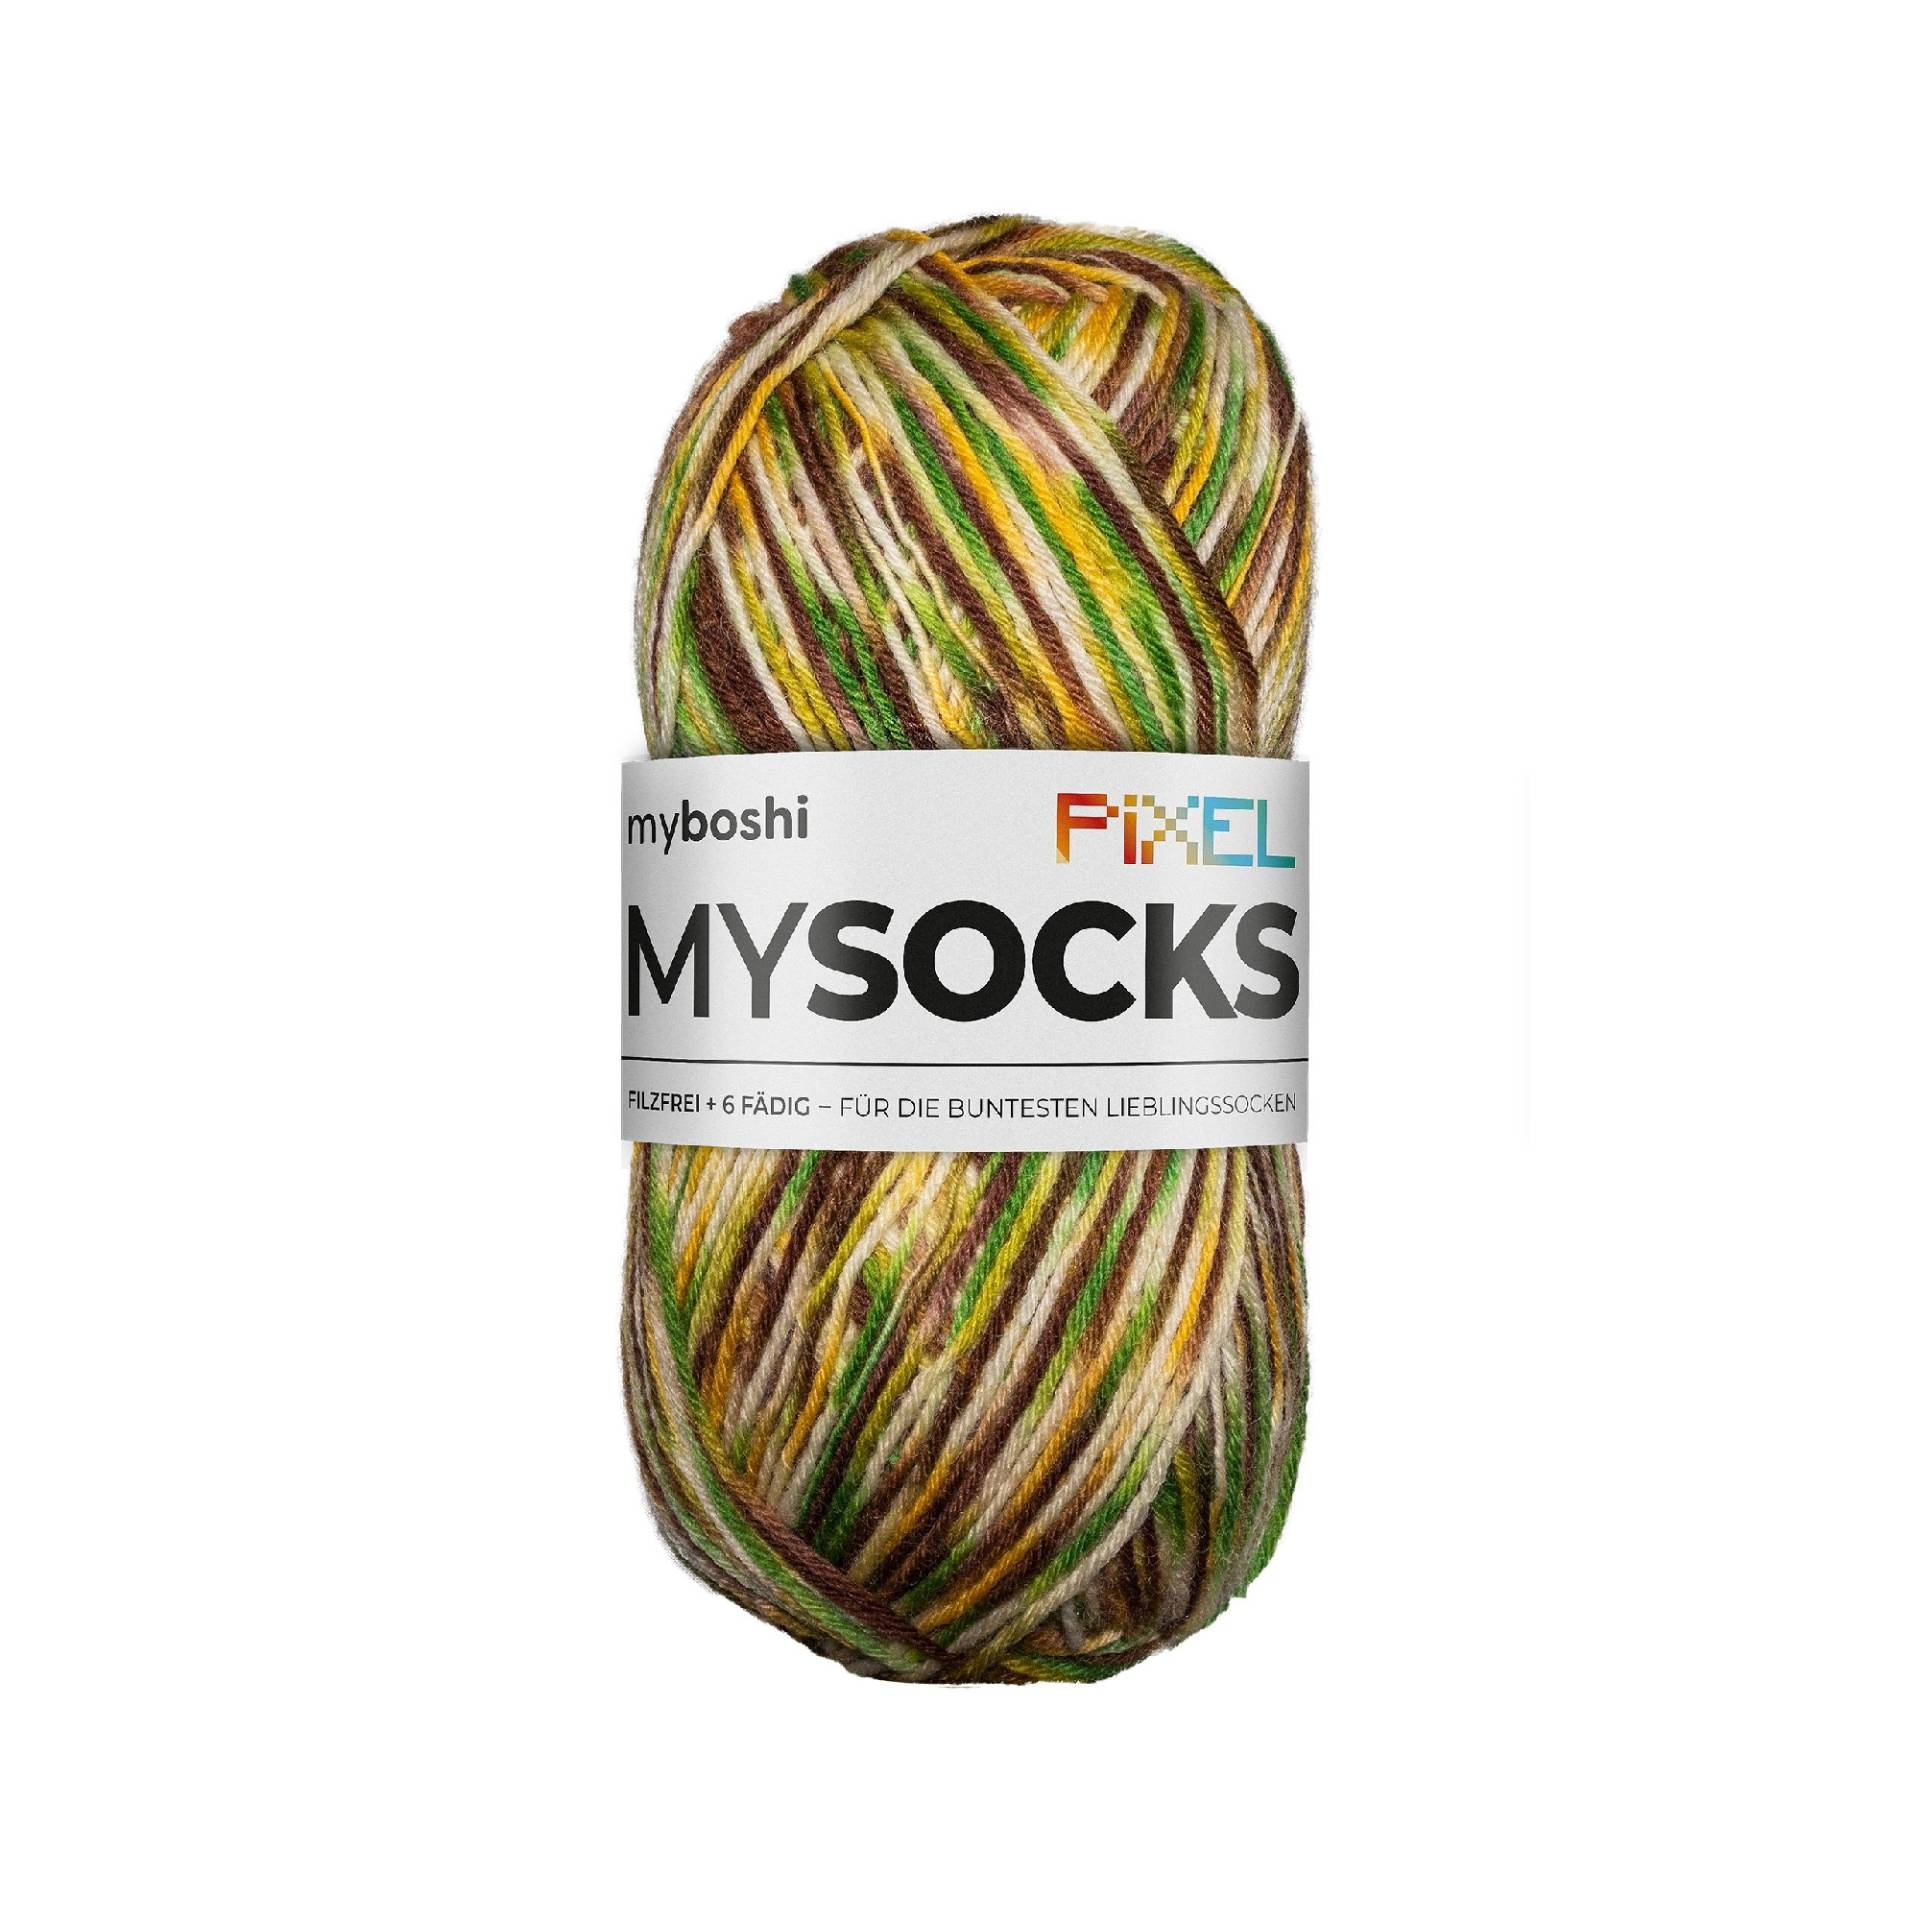 myboshi mysocks Pixel 6-fädige Sockenwolle Copper 150g, braun-gelb von Stoffe Hemmers